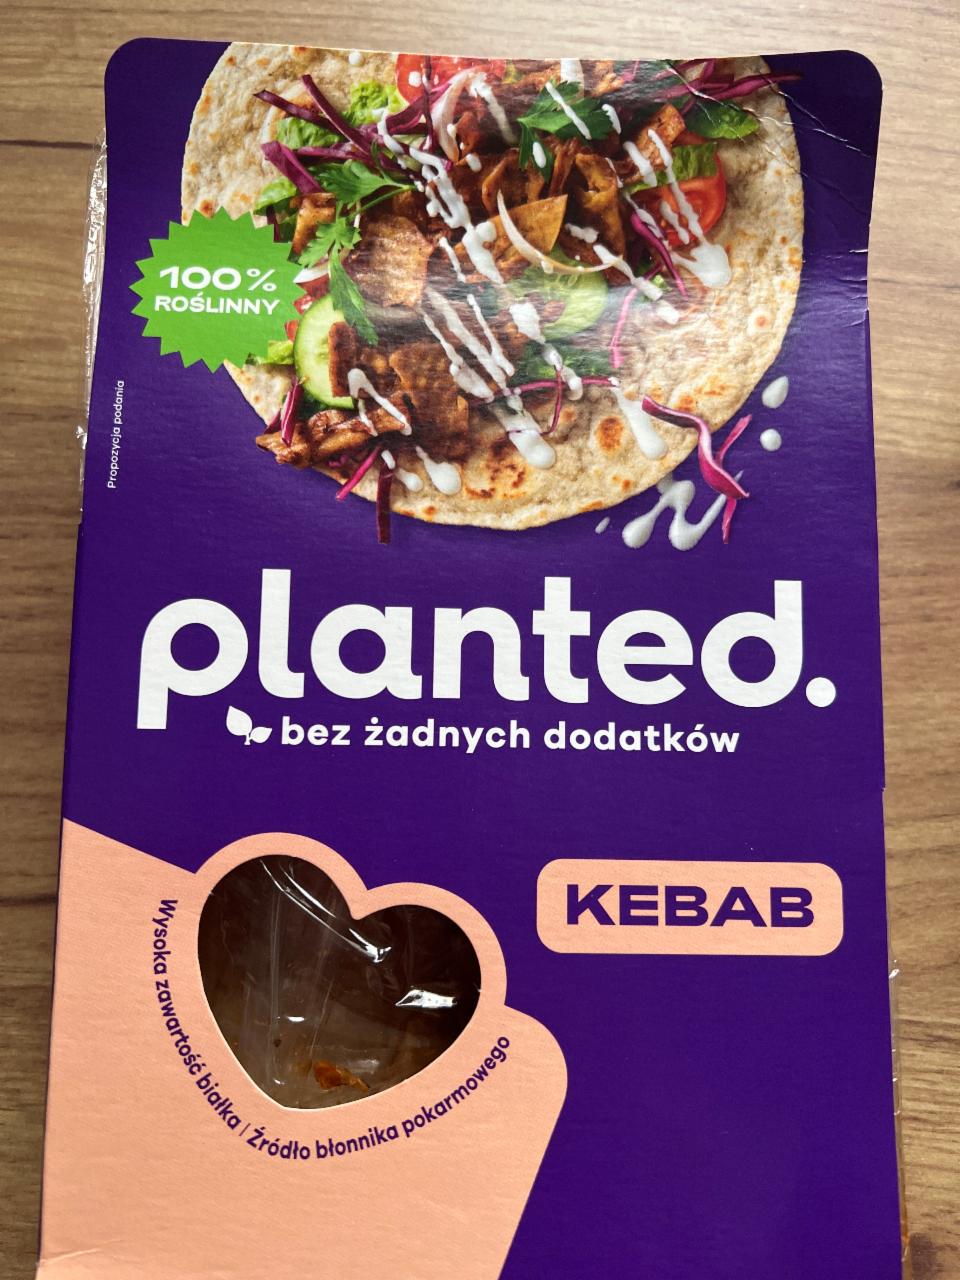 Zdjęcia - Kebab planted.